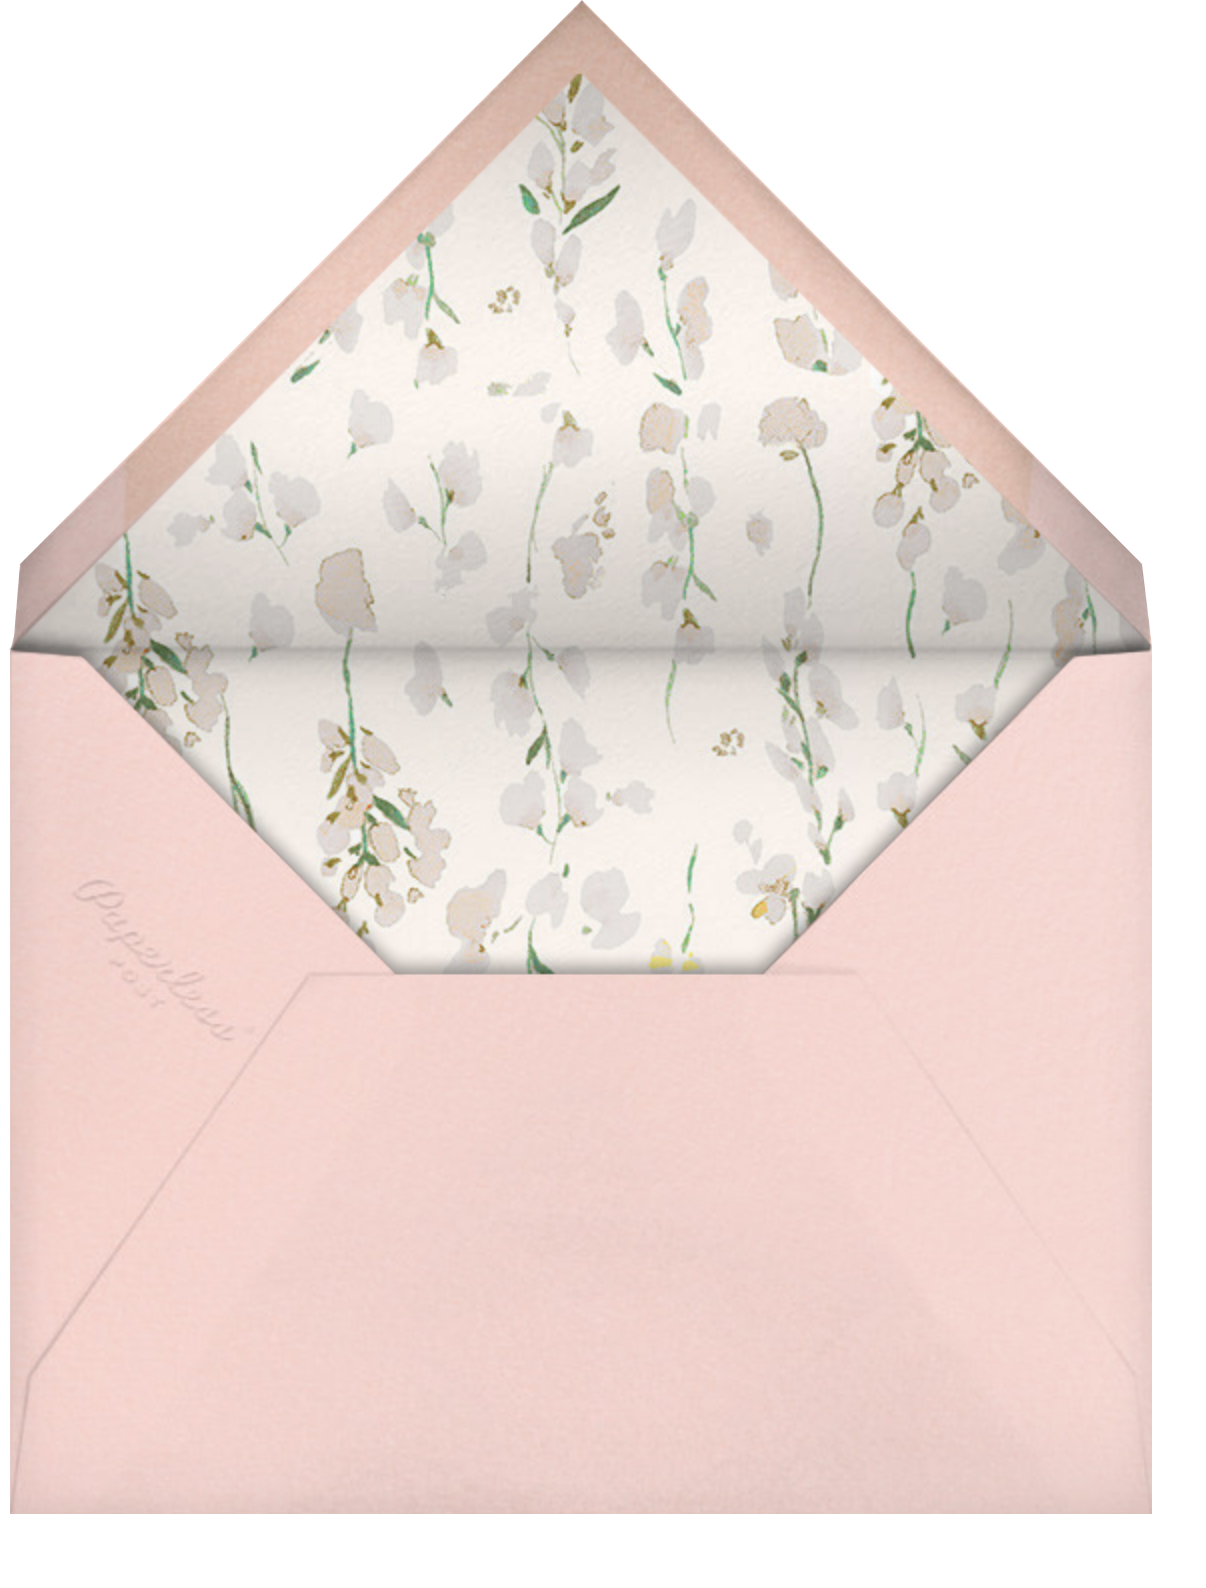 Splendid Floral (Invitation) - Cream - Carolina Herrera - Envelope